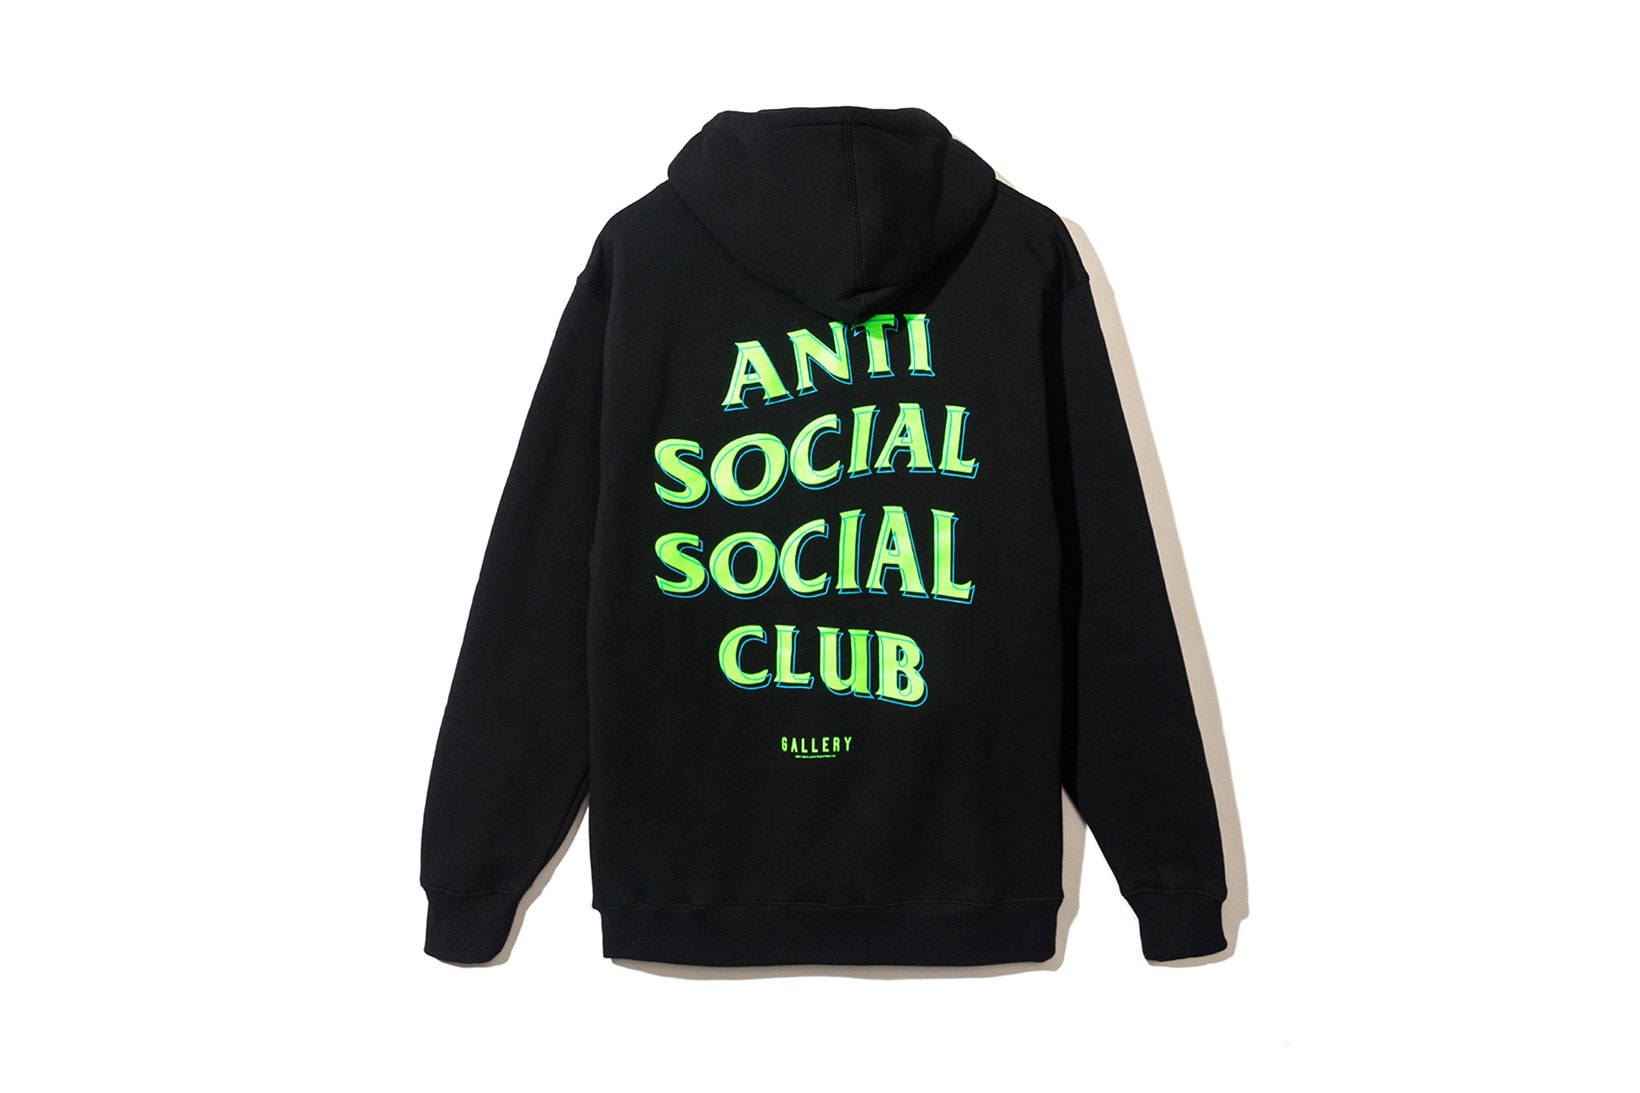 RSVP Gallery x Anti Social Social Club Capsule First Look